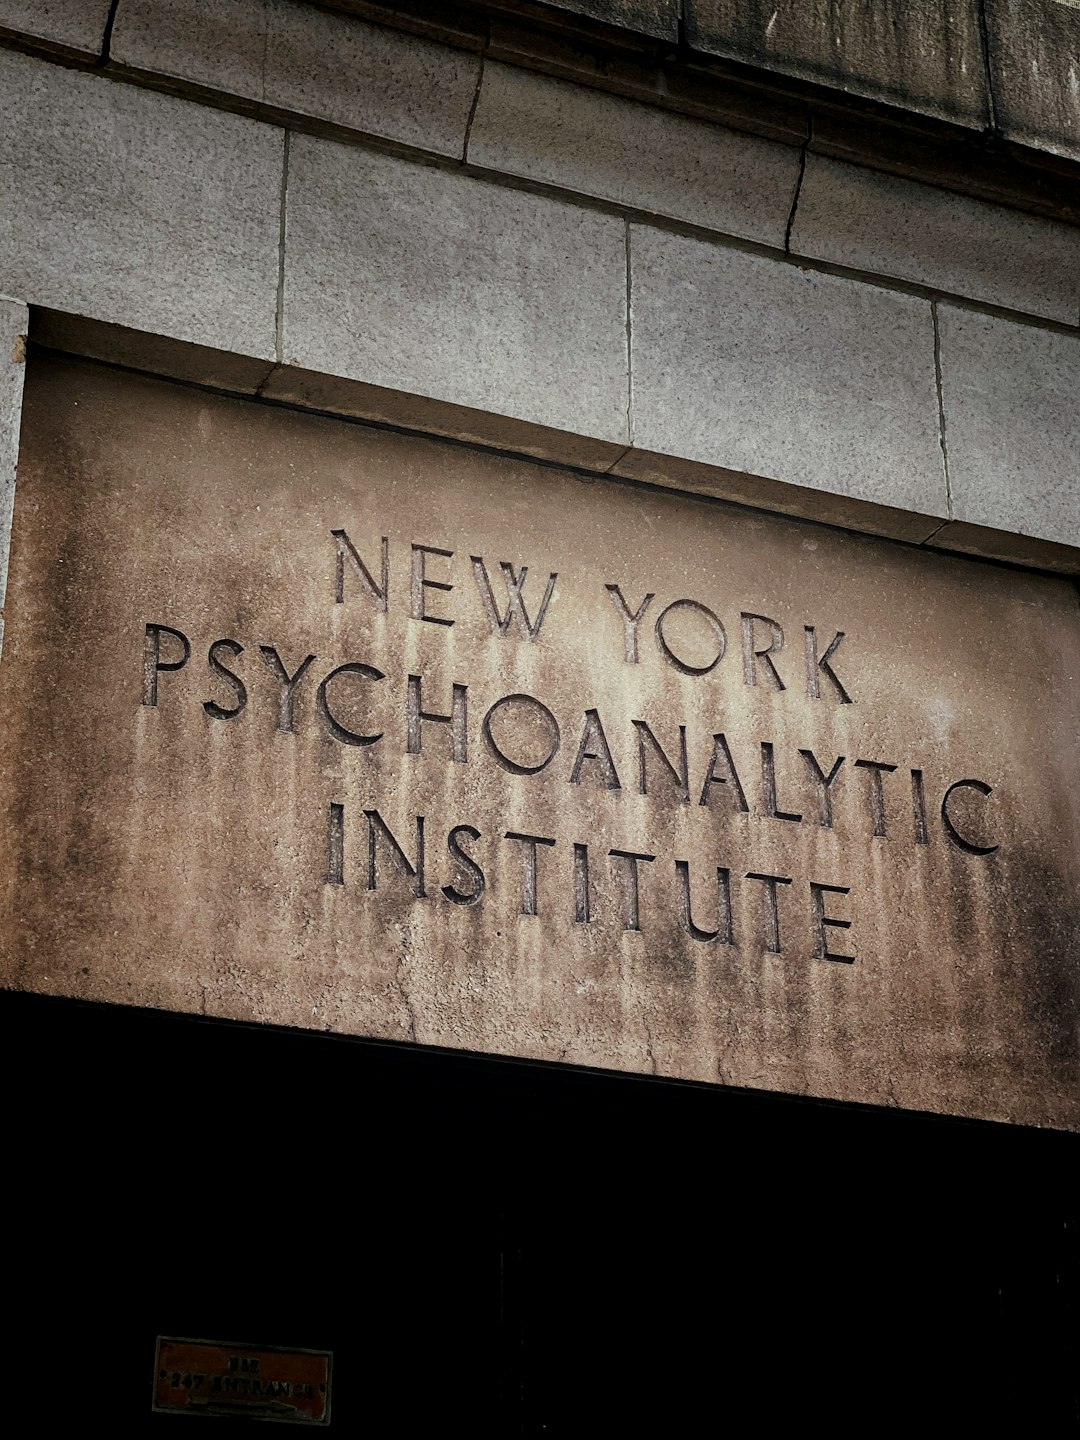 New York Psychoanalytic Institute sign